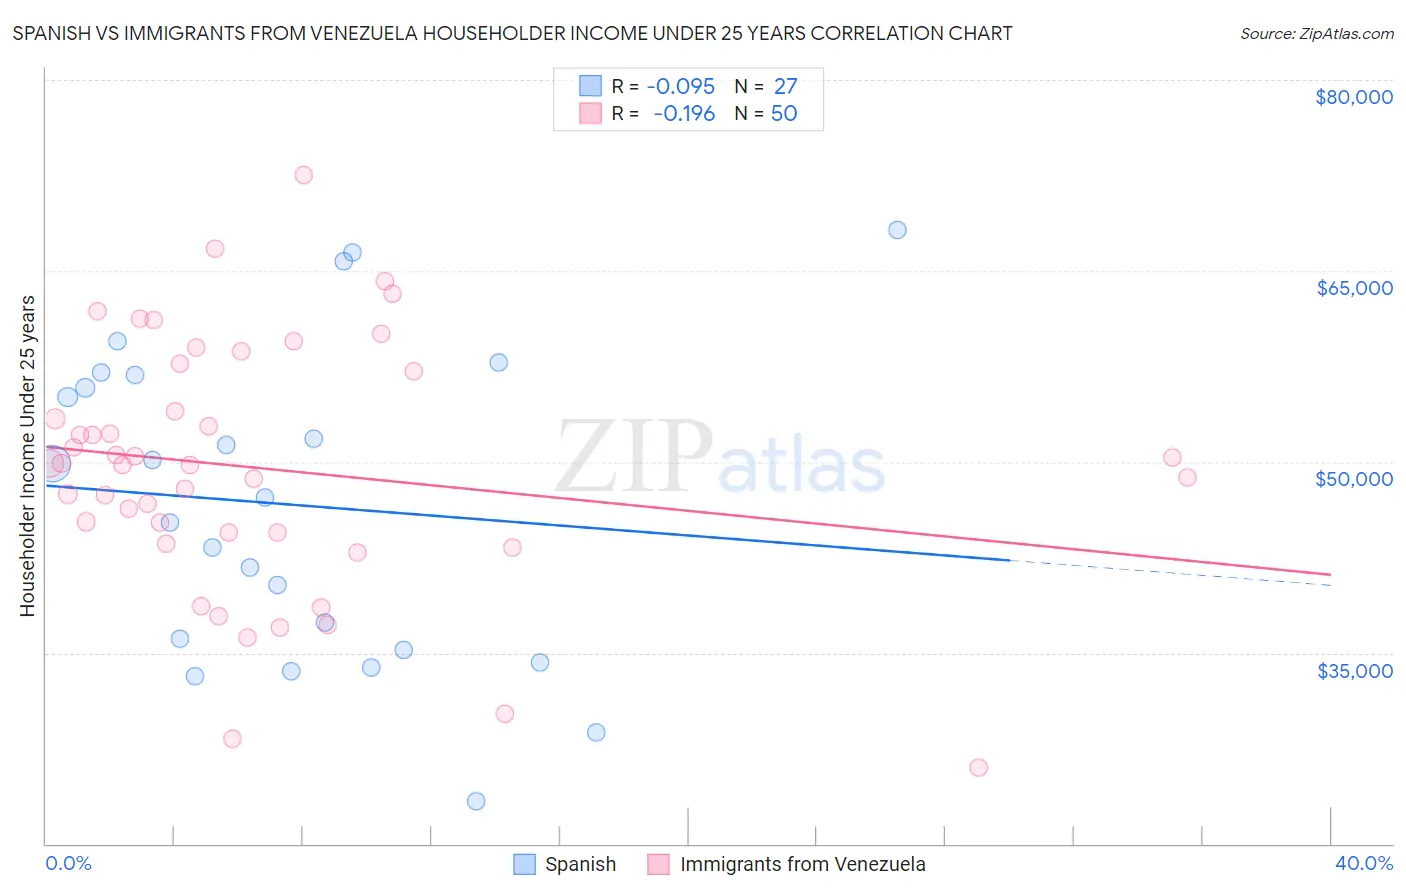 Spanish vs Immigrants from Venezuela Householder Income Under 25 years